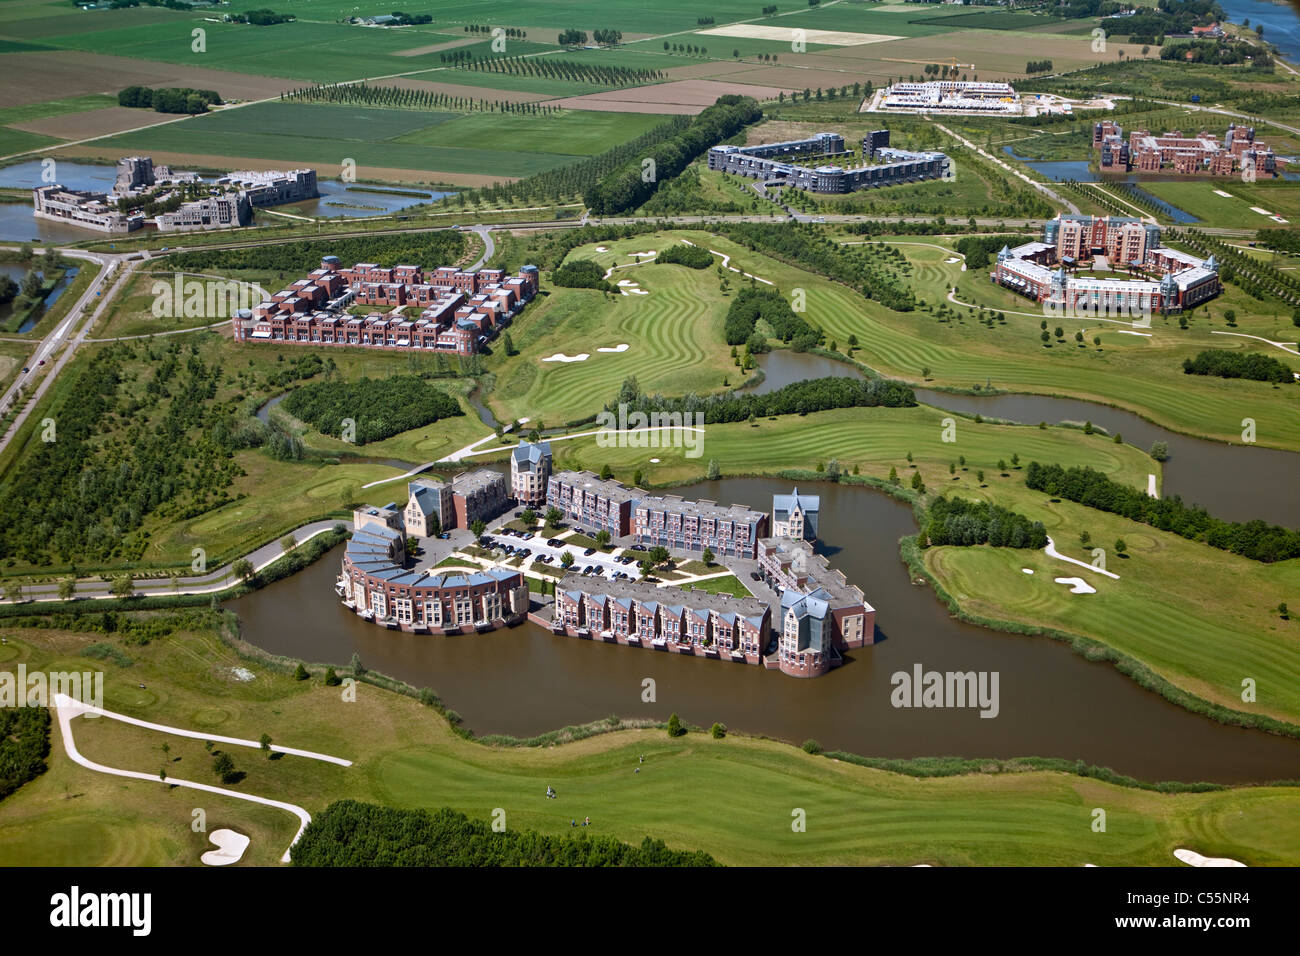 The Netherlands, near Den Bosch, modern residential buildings called Haverleij castles. Aerial. Stock Photo